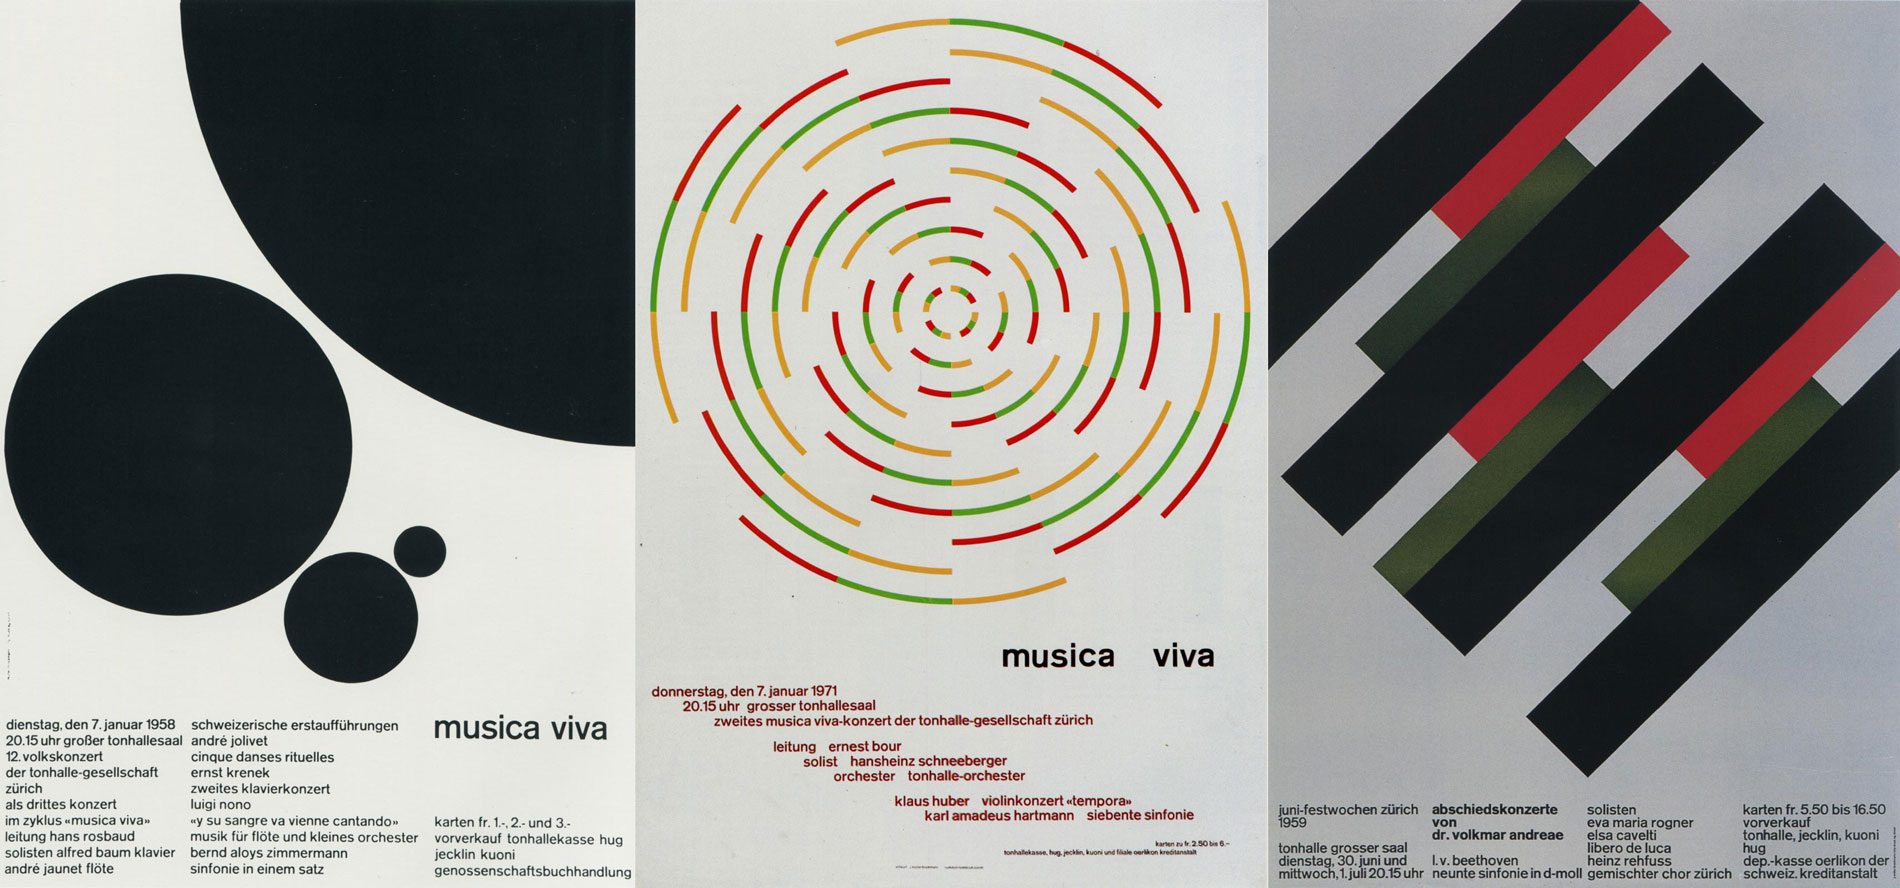 World Design Day 2017 - Josef Müller-Brockmann - Viva Musica poster series